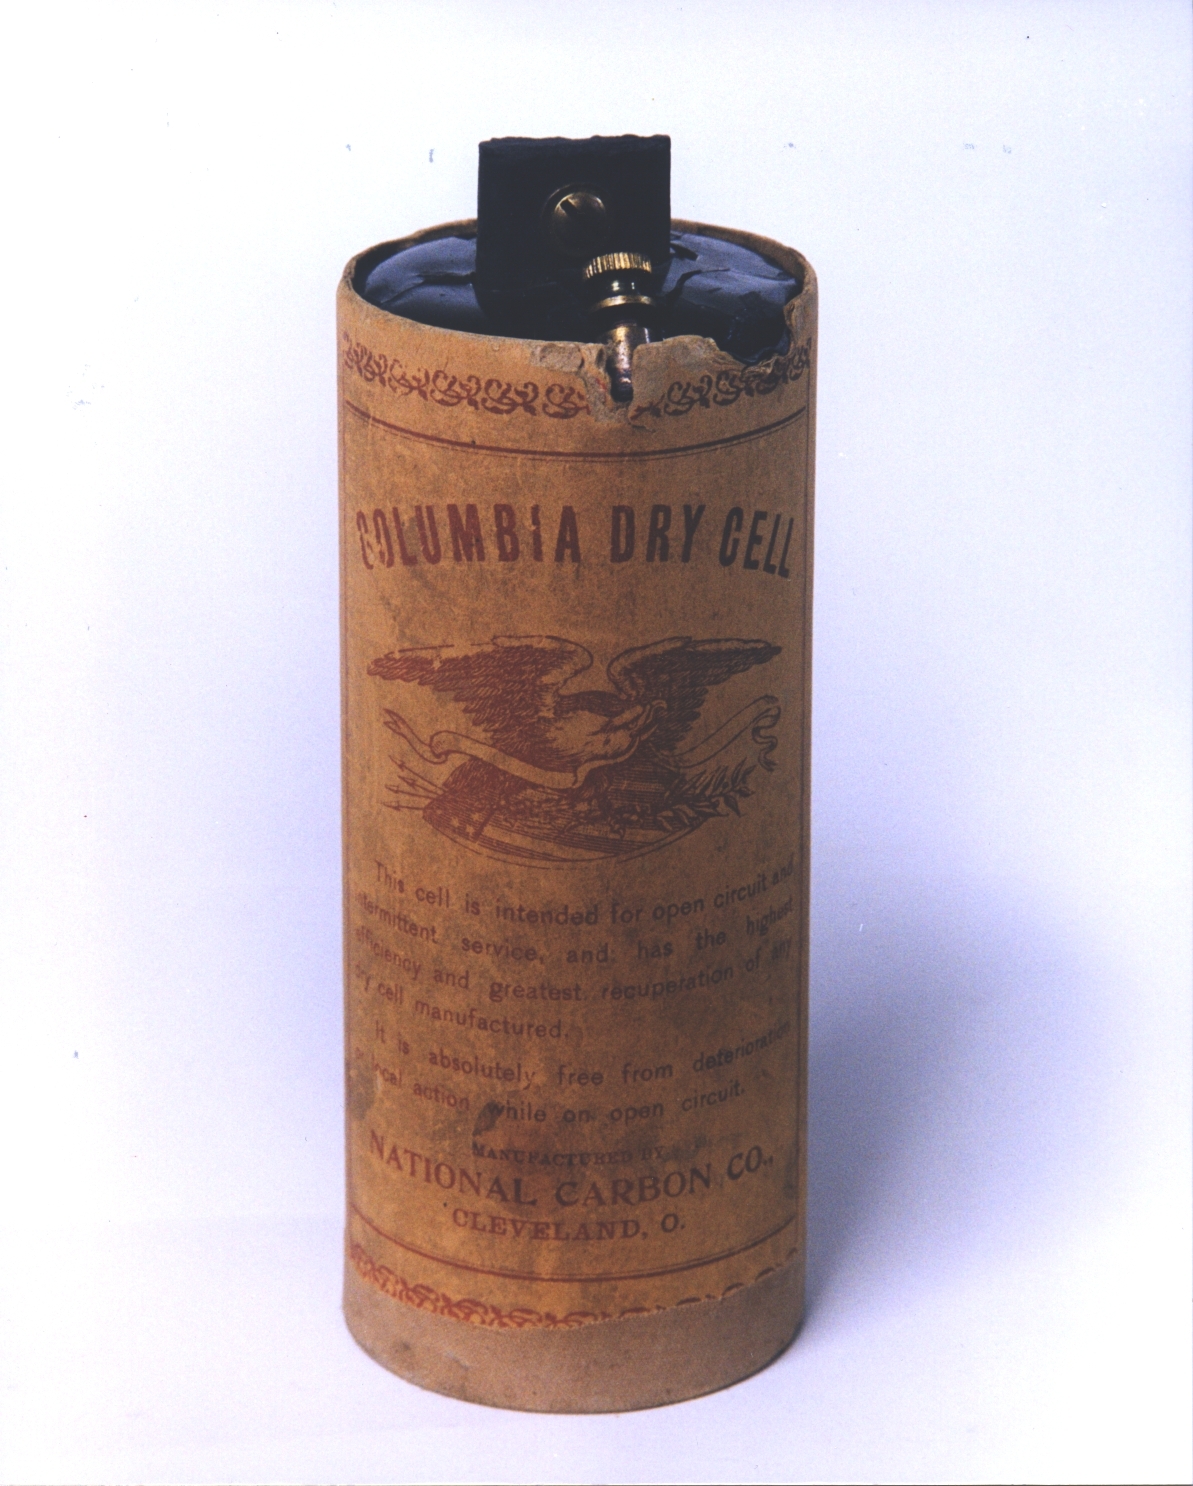 First battery. Сухая батарея Колумбия 1896. Первая батарейка сухого типа с углеродом марки Columbia.